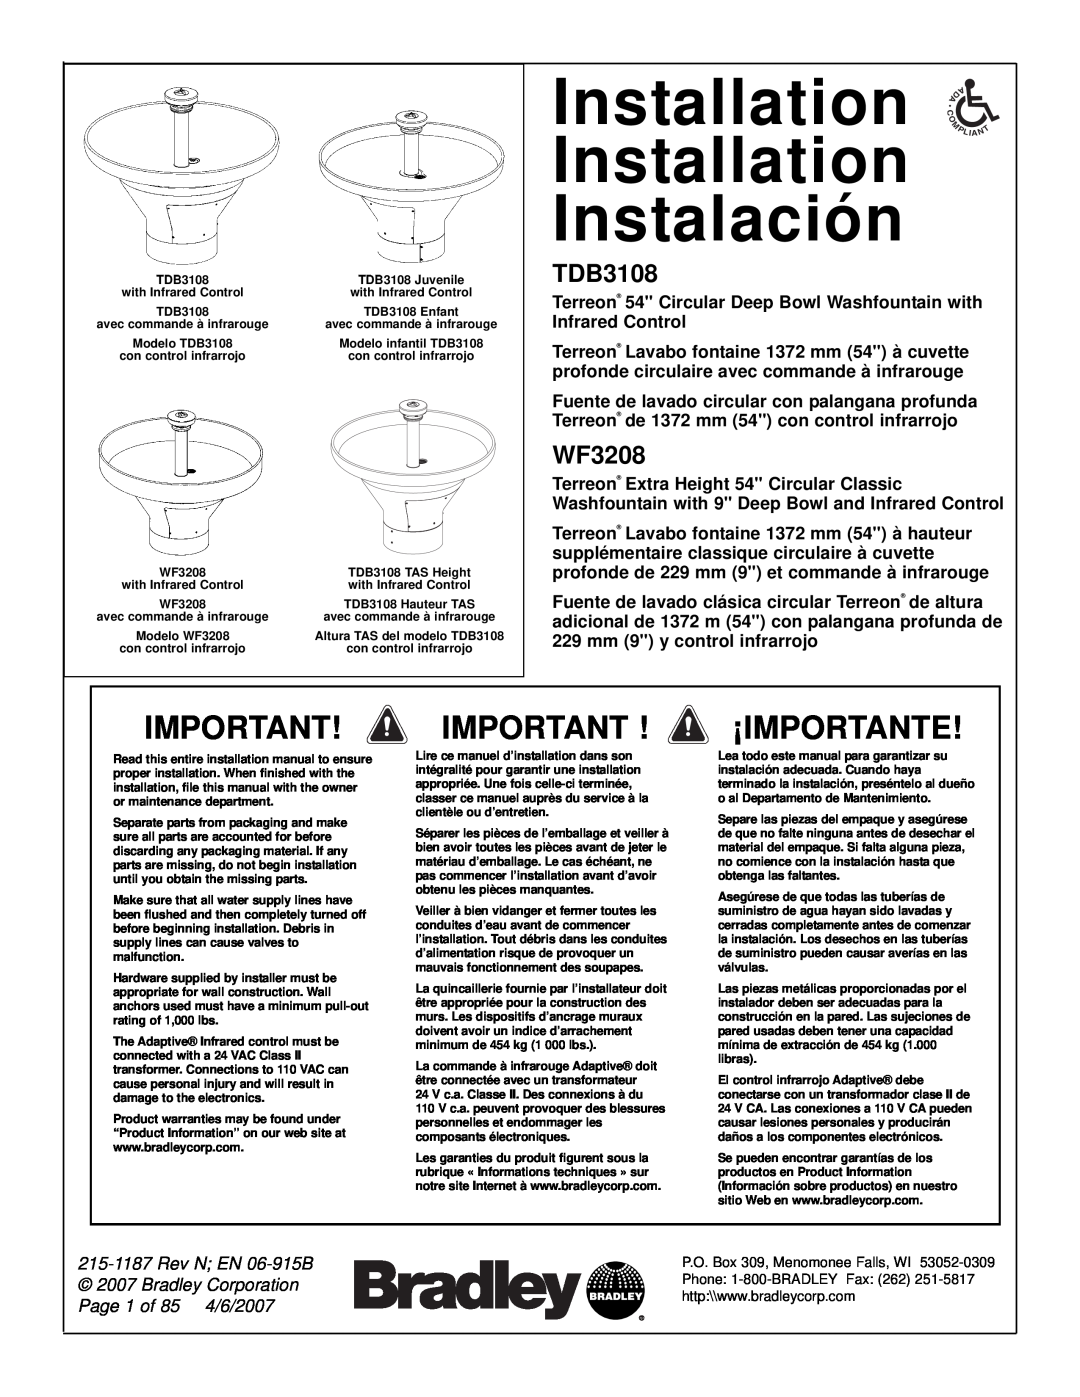 Bradley Smoker TDB3108 installation manual WF3208, Installation Installation Instalación, ¡Importante 